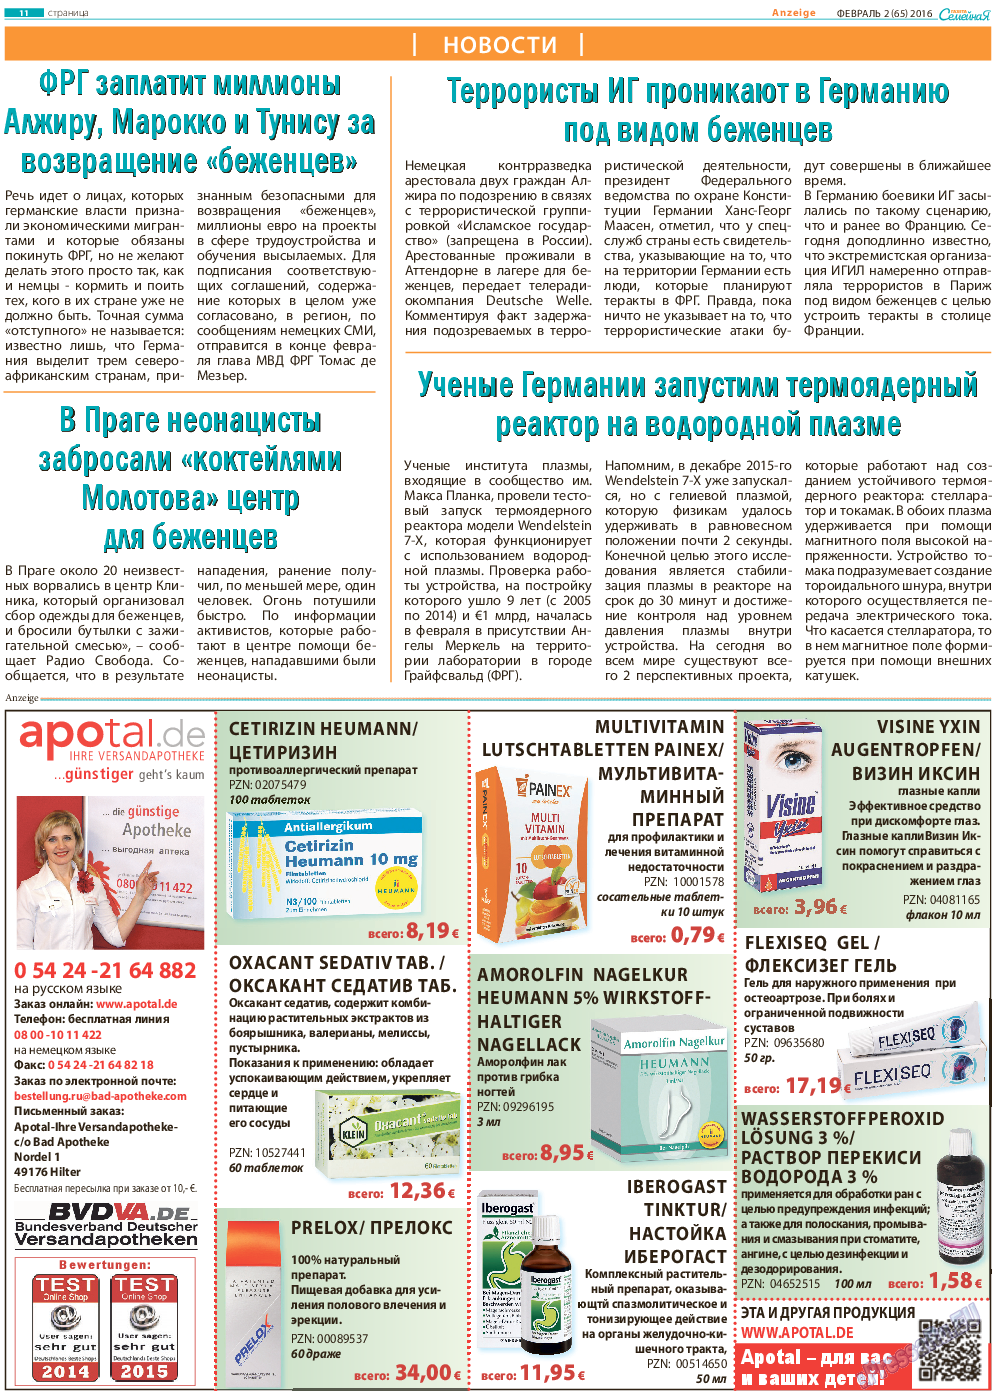 Семейная газета, газета. 2016 №2 стр.11